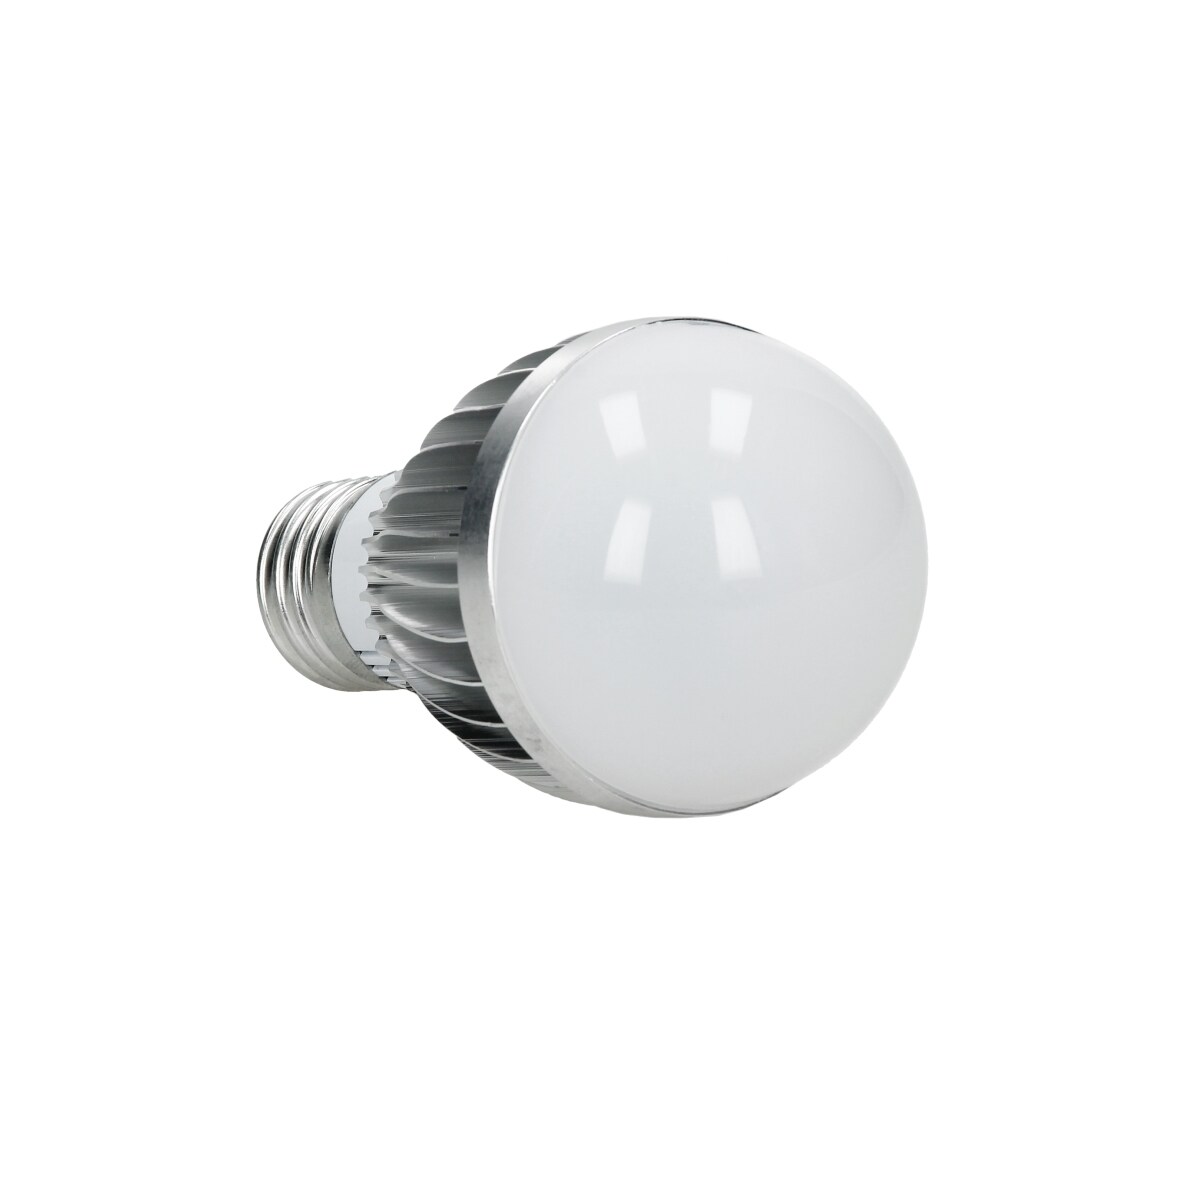 Set om fem 5w E27 RGB LED Spot glödlampa Dimbar 24 Key fjärrkontroll lampa  - Elgiganten